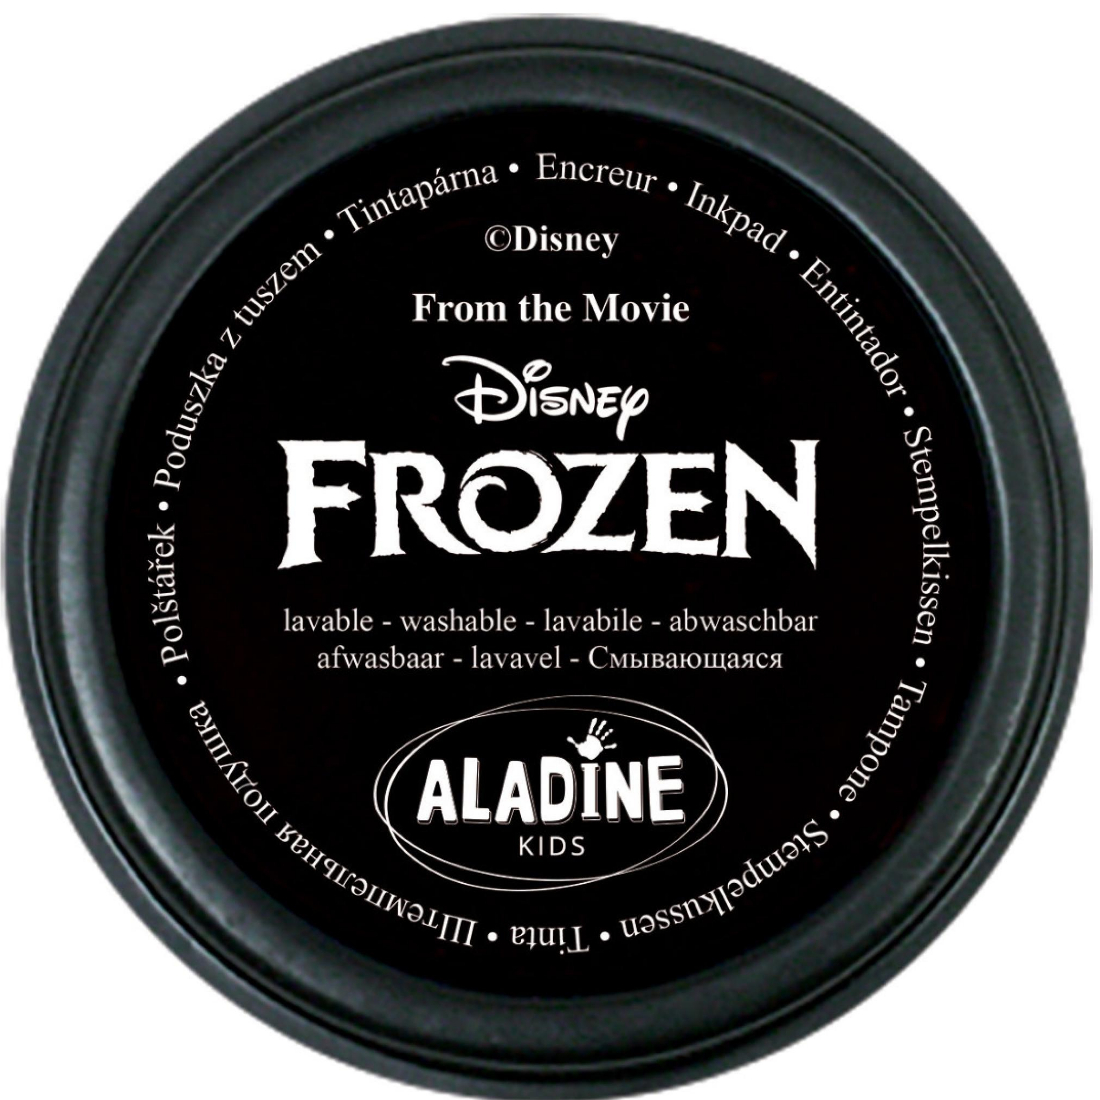 Pack Carimbos Stampo Disney Frozen 8 Peças aladine